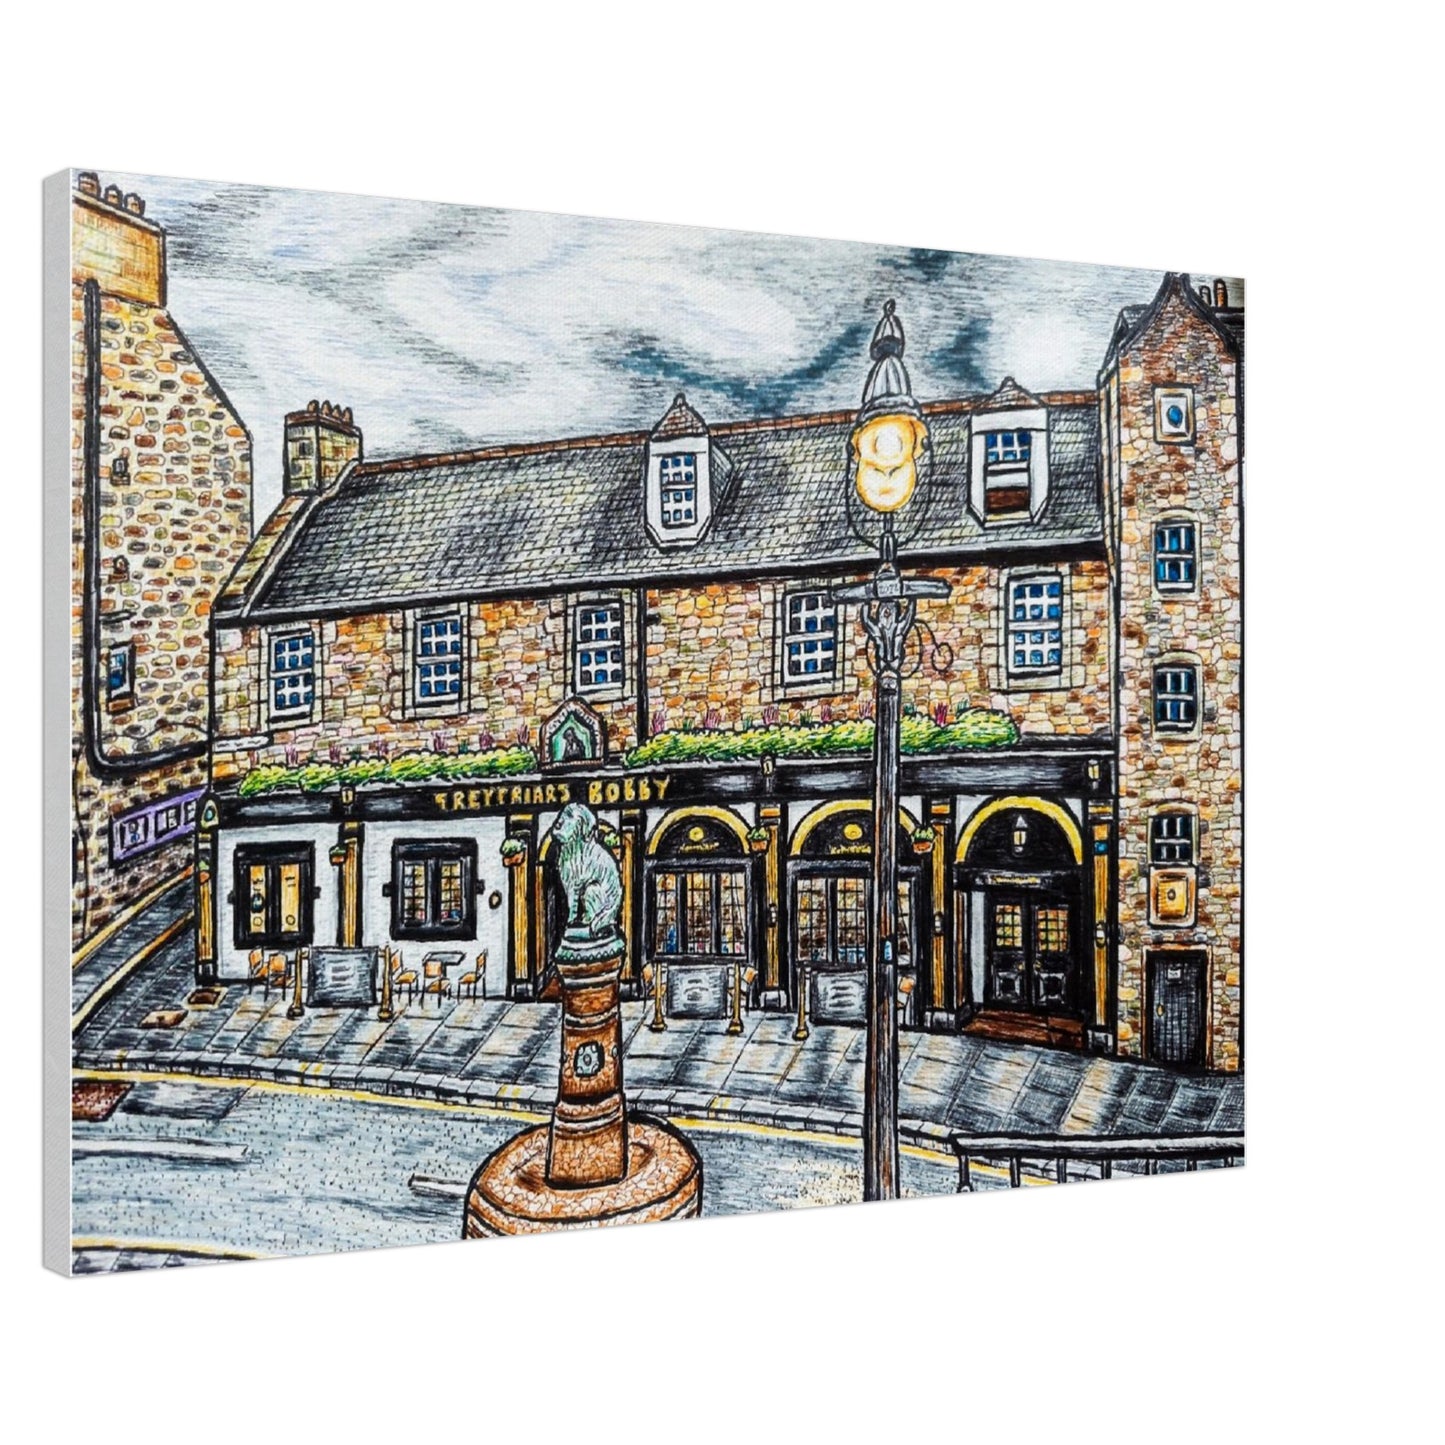 Edinburgh Greyfriar's Bobby Canvas Print